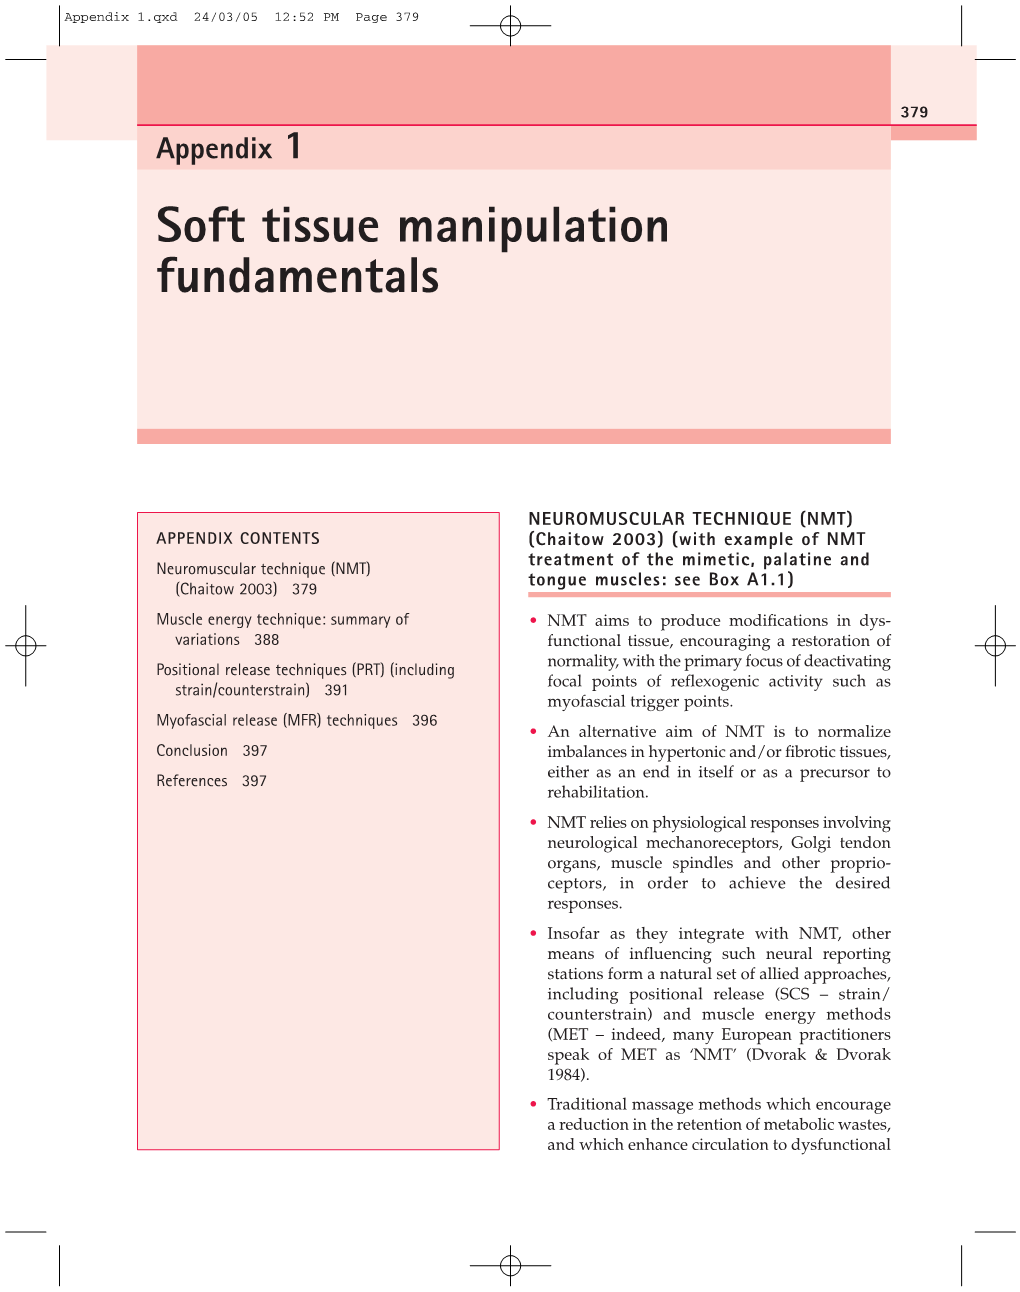 Appendix 1. Soft Tissue Manipulation Fundamentals